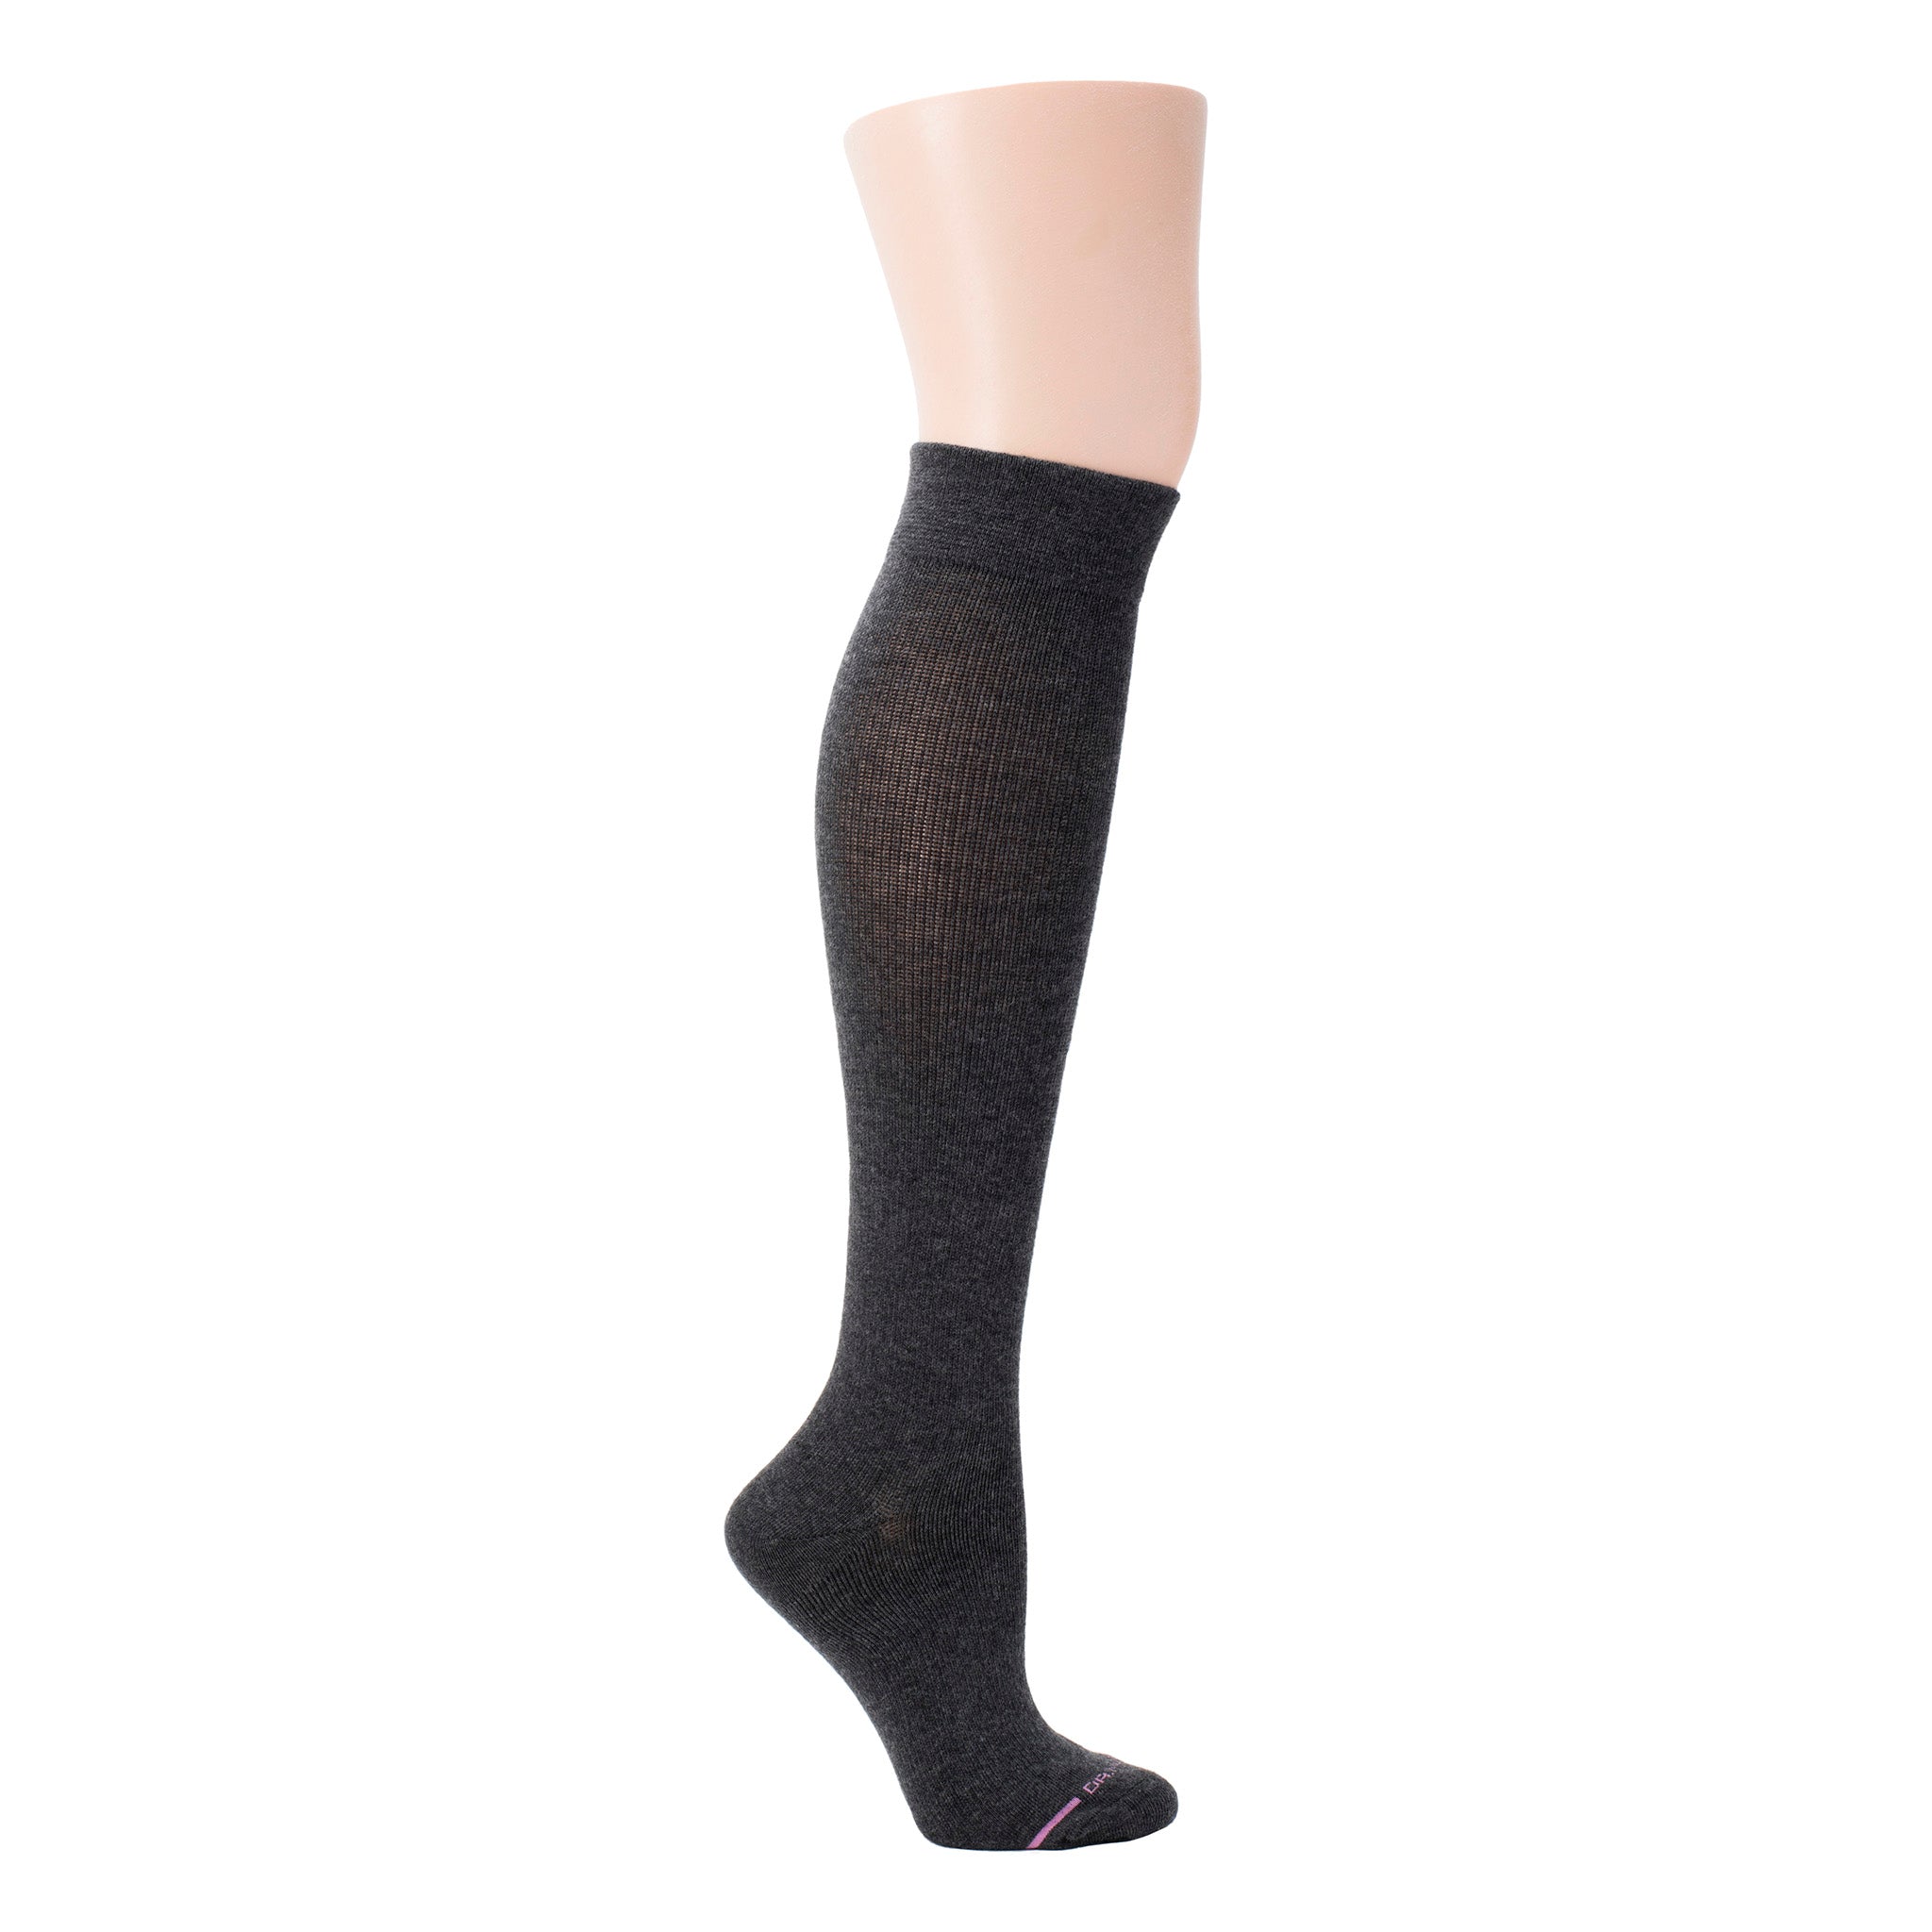 Solid Cotton Blend | Knee-High Compression Socks For Women